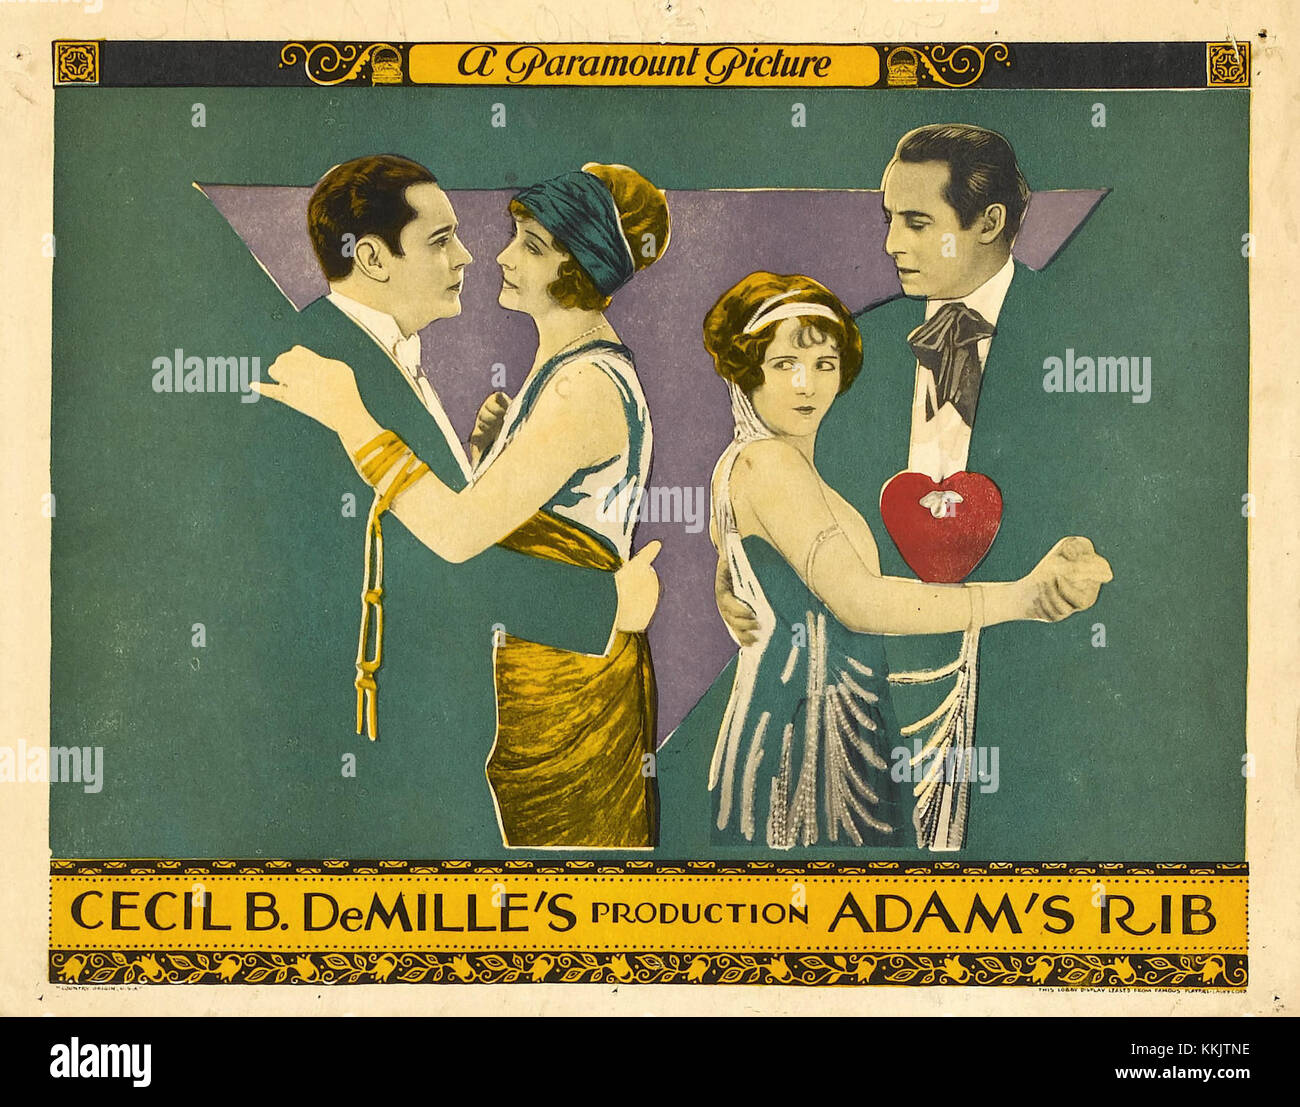 Adamsrib-lobbycard-color-1923 Stock Photo